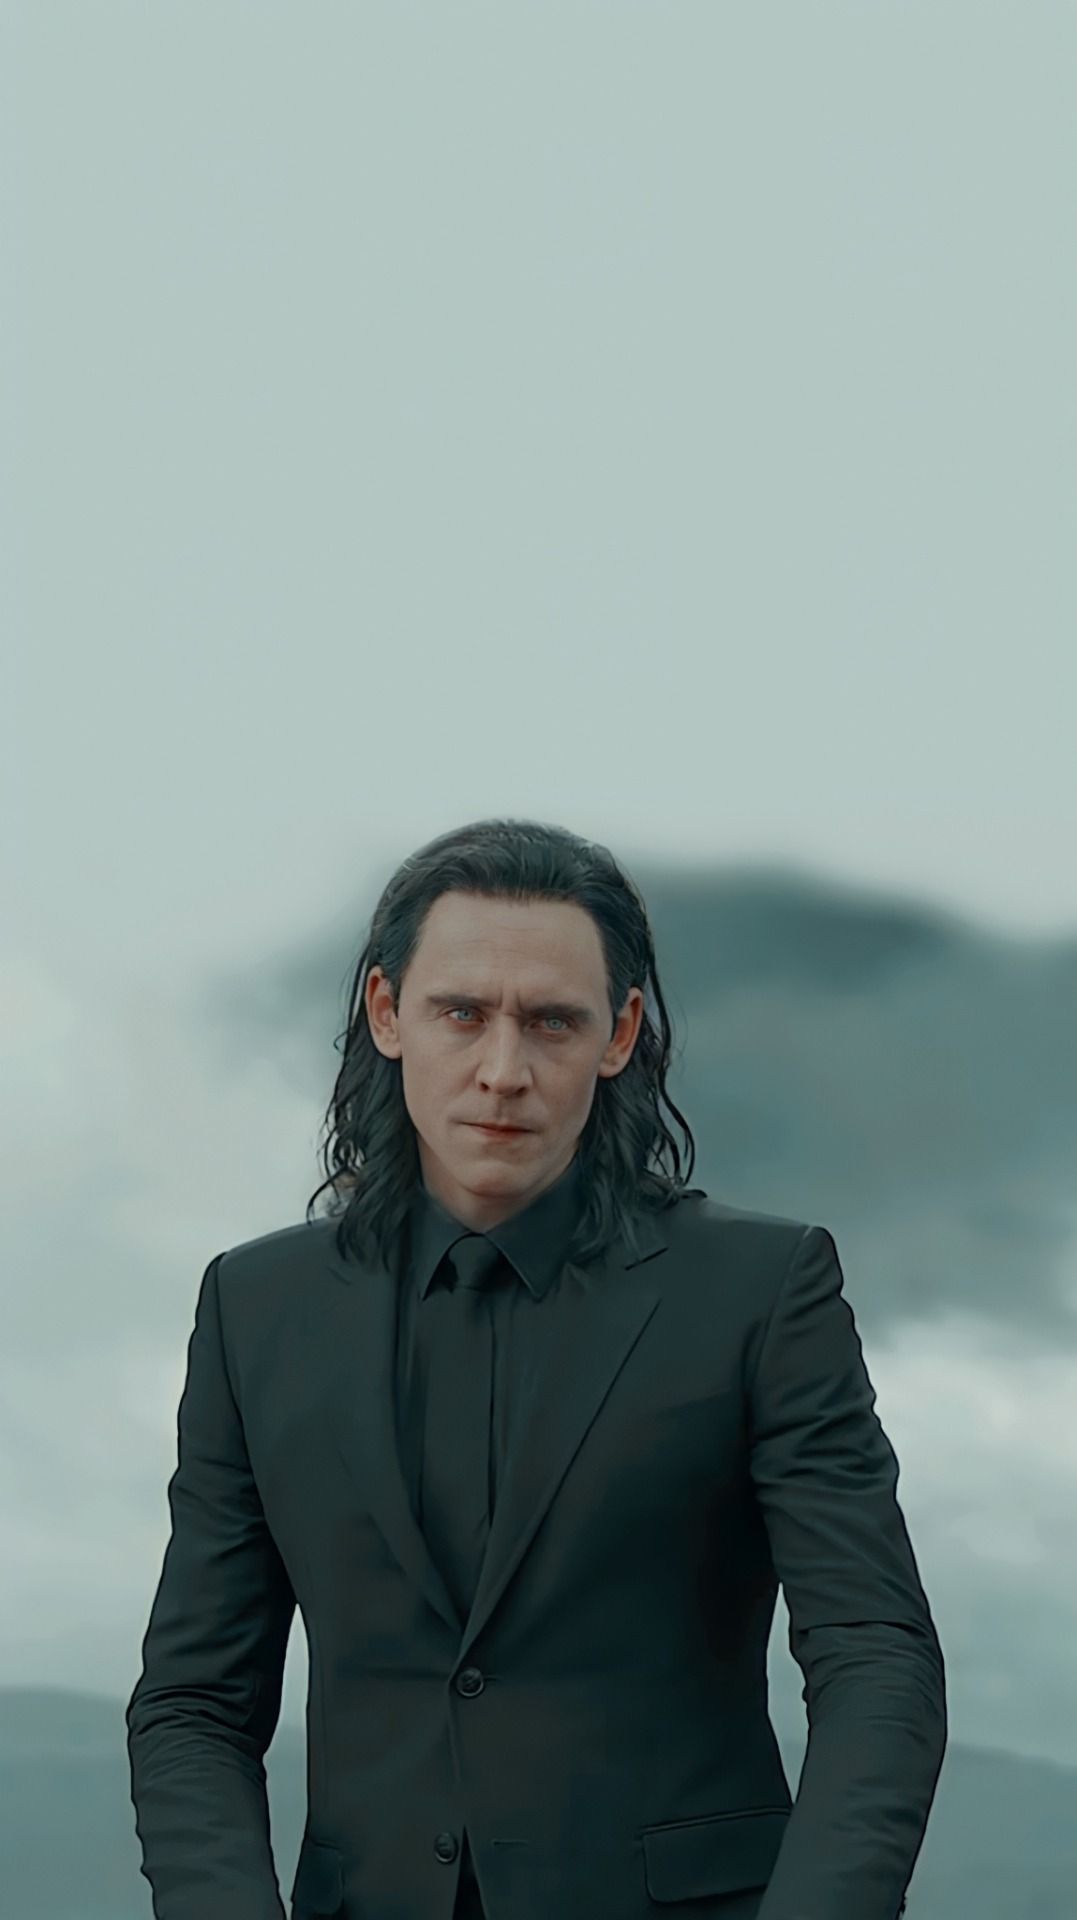 Marvel Tom Hiddleston As Loki Wallpapers